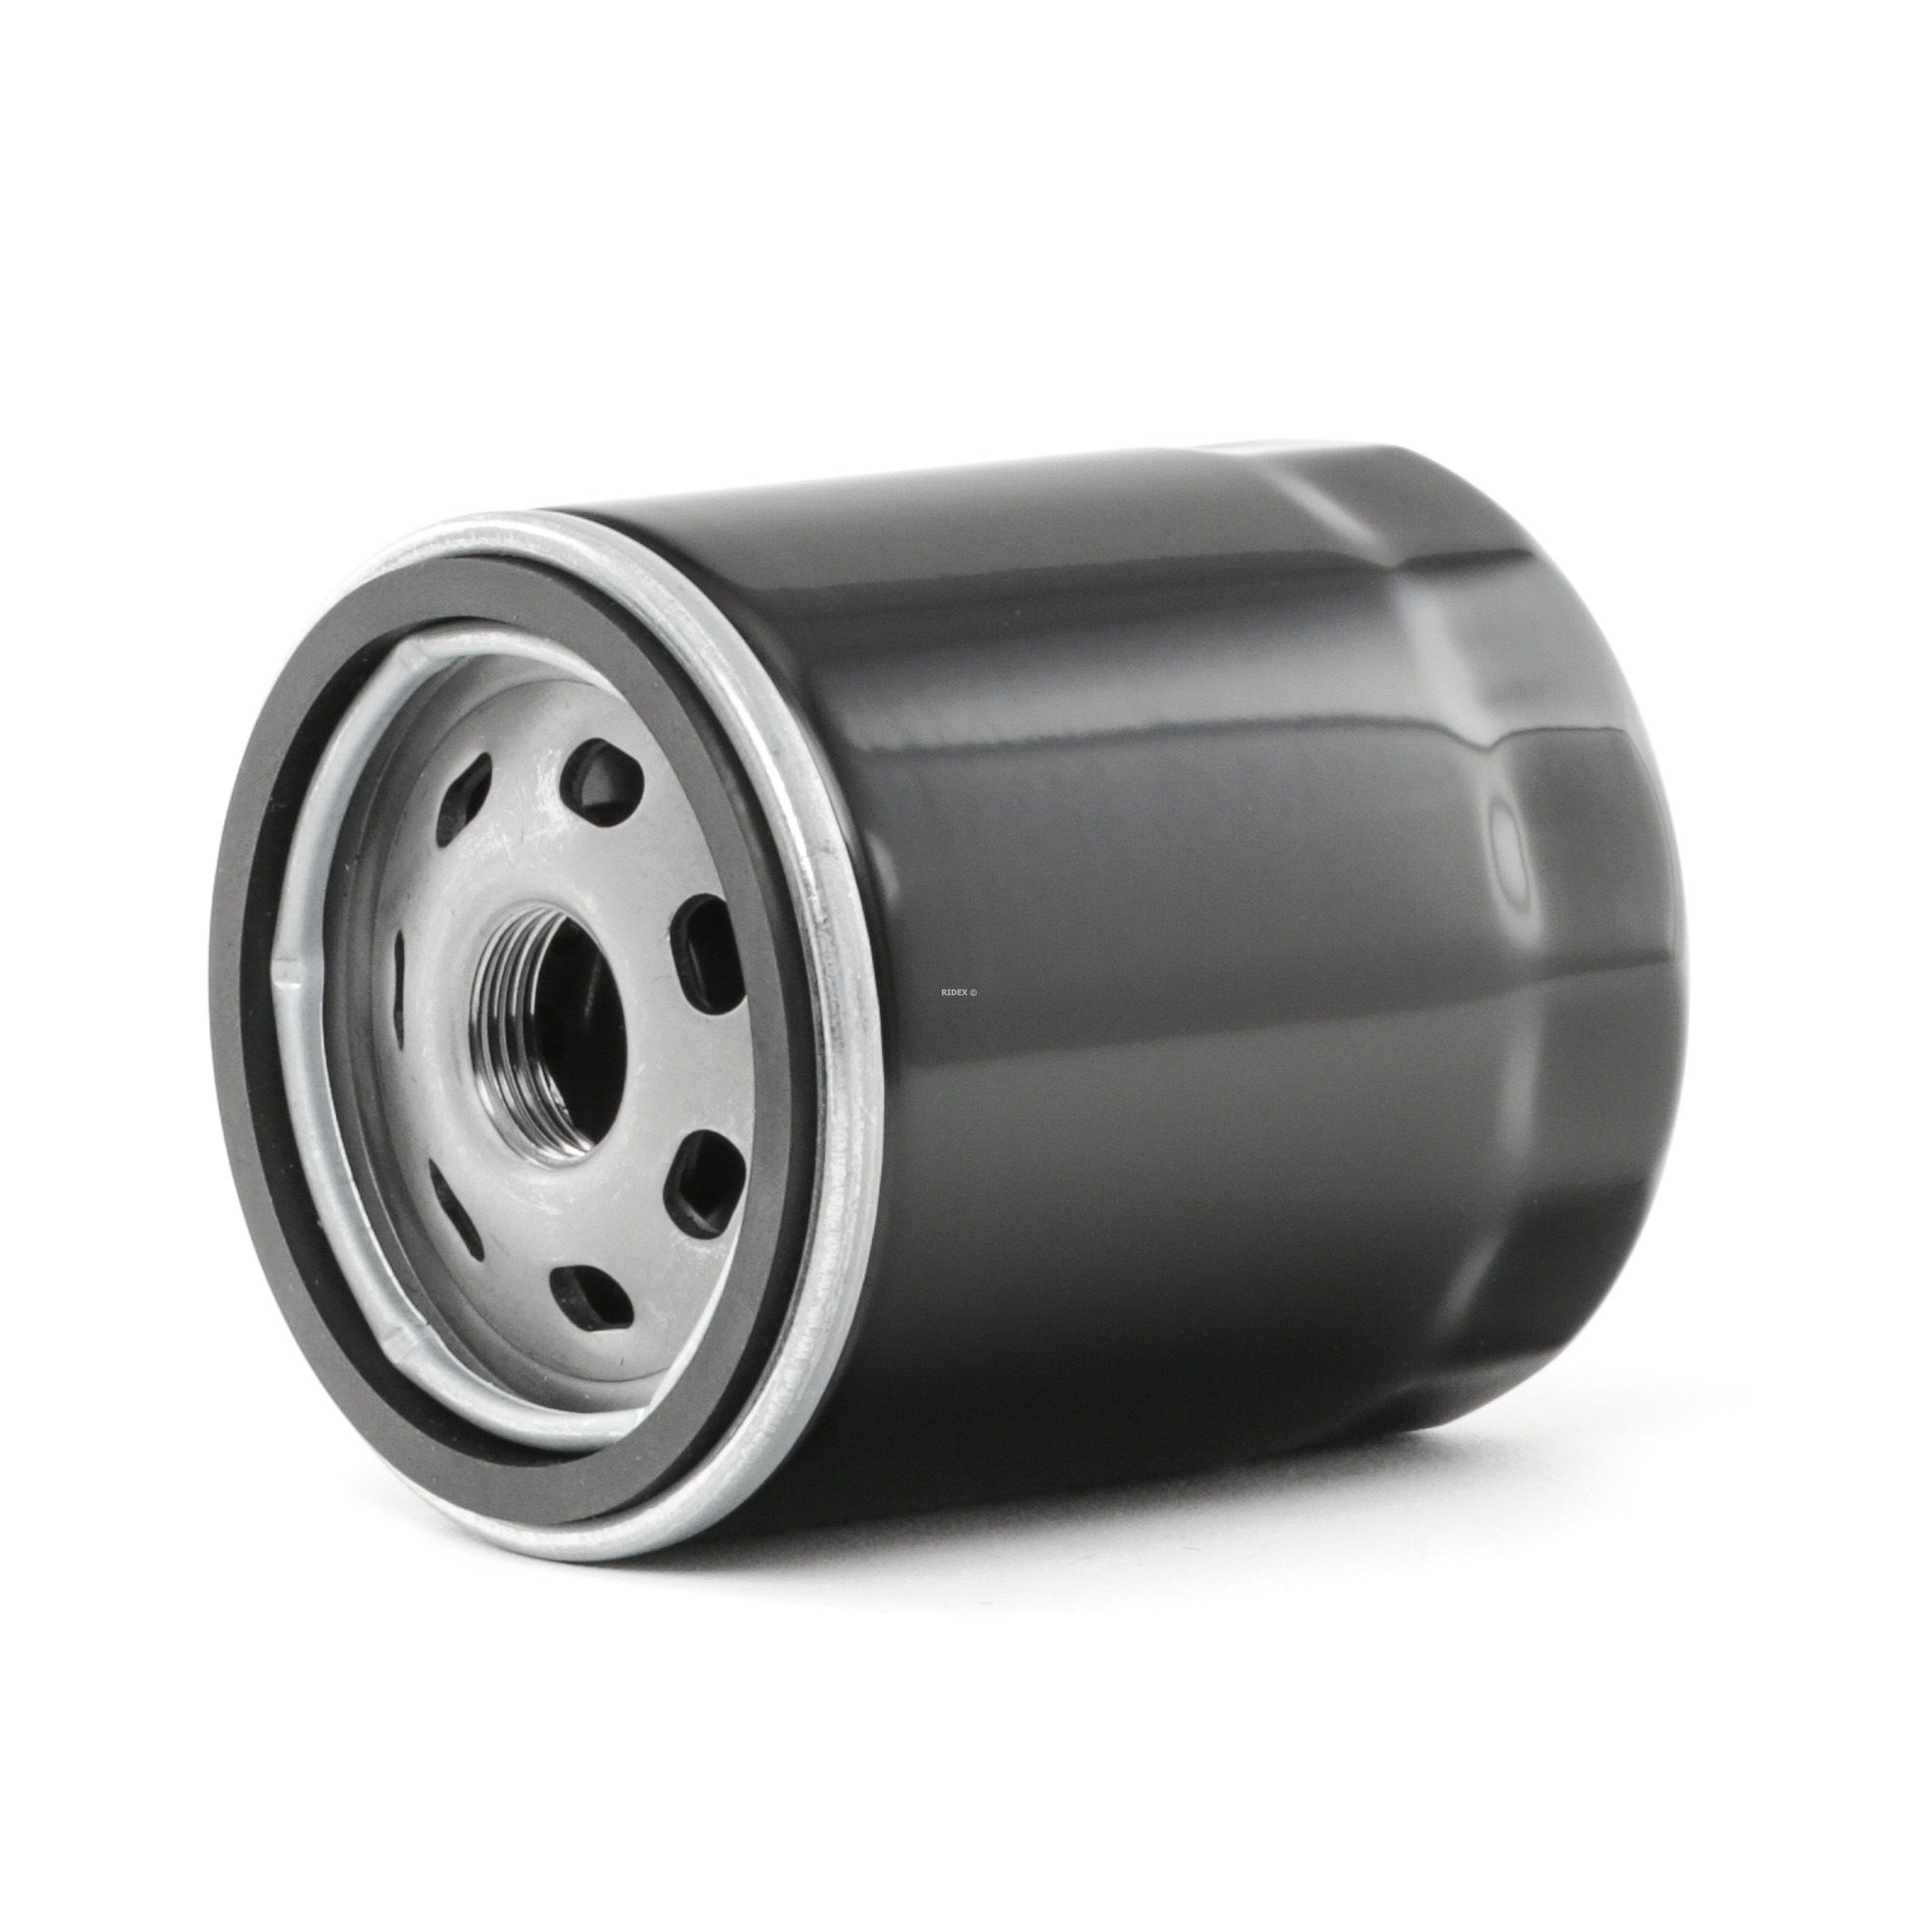 Buy Oil Filter RIDEX 7O0075 - PORSCHE Filters parts online